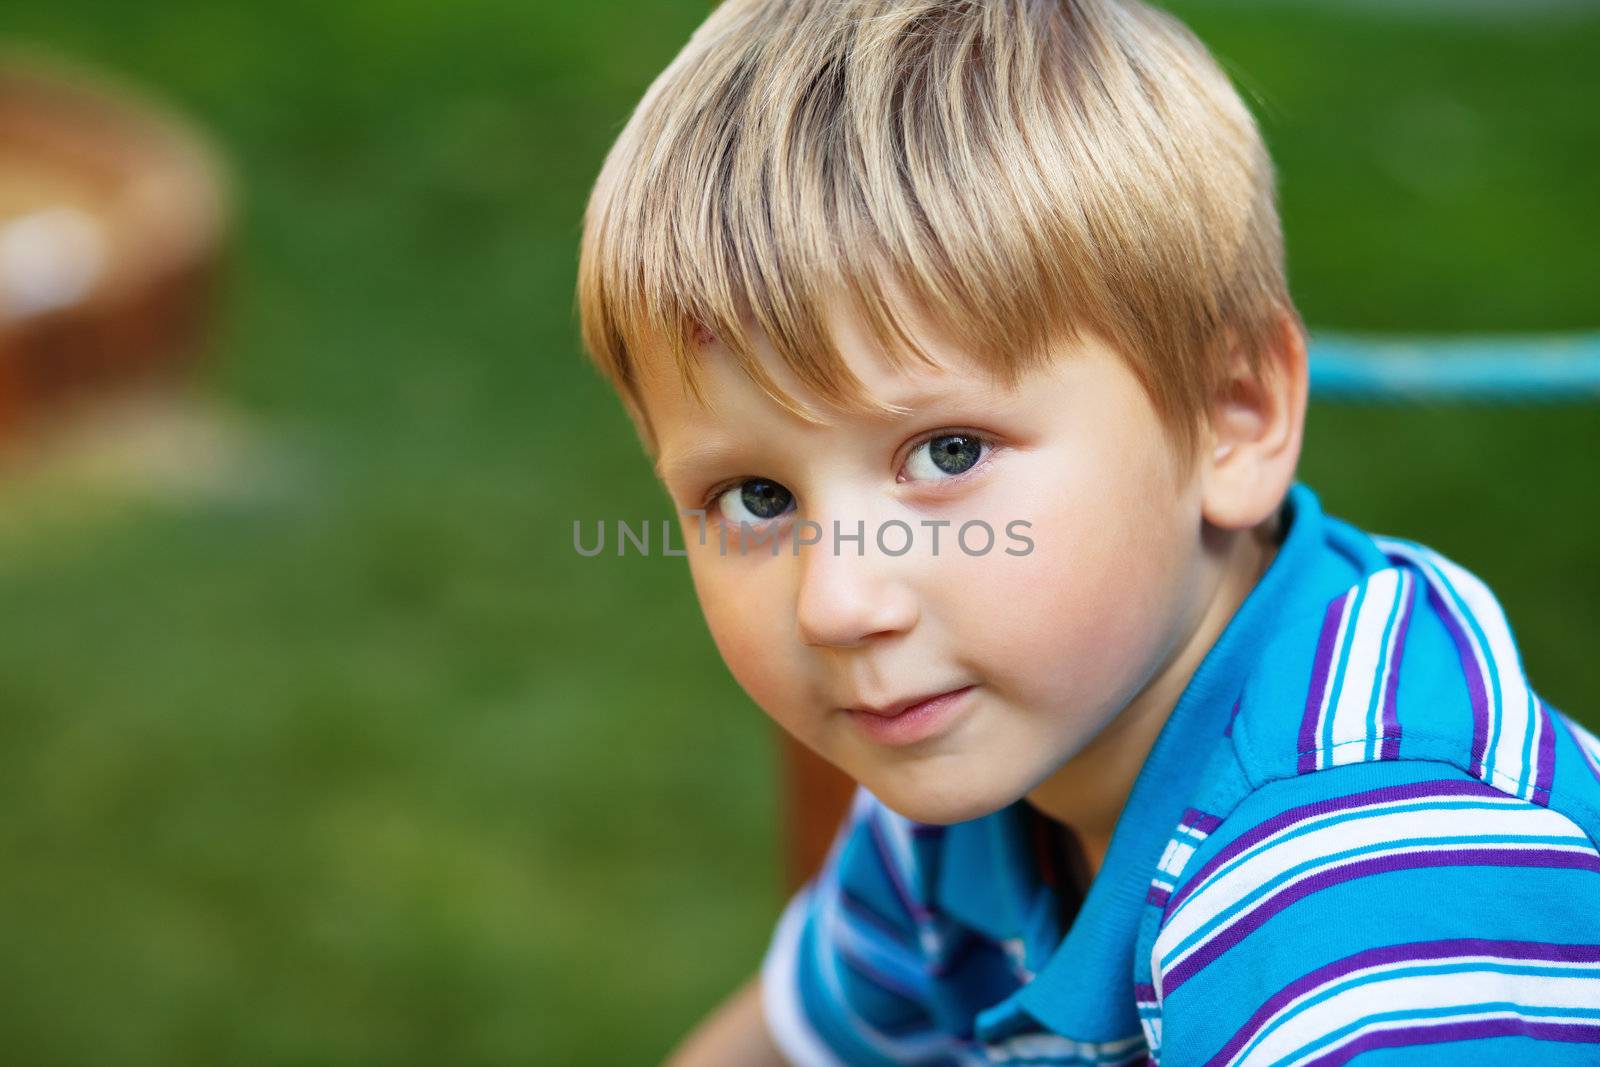 Horizontal outdoor portrait of a cute blond boy